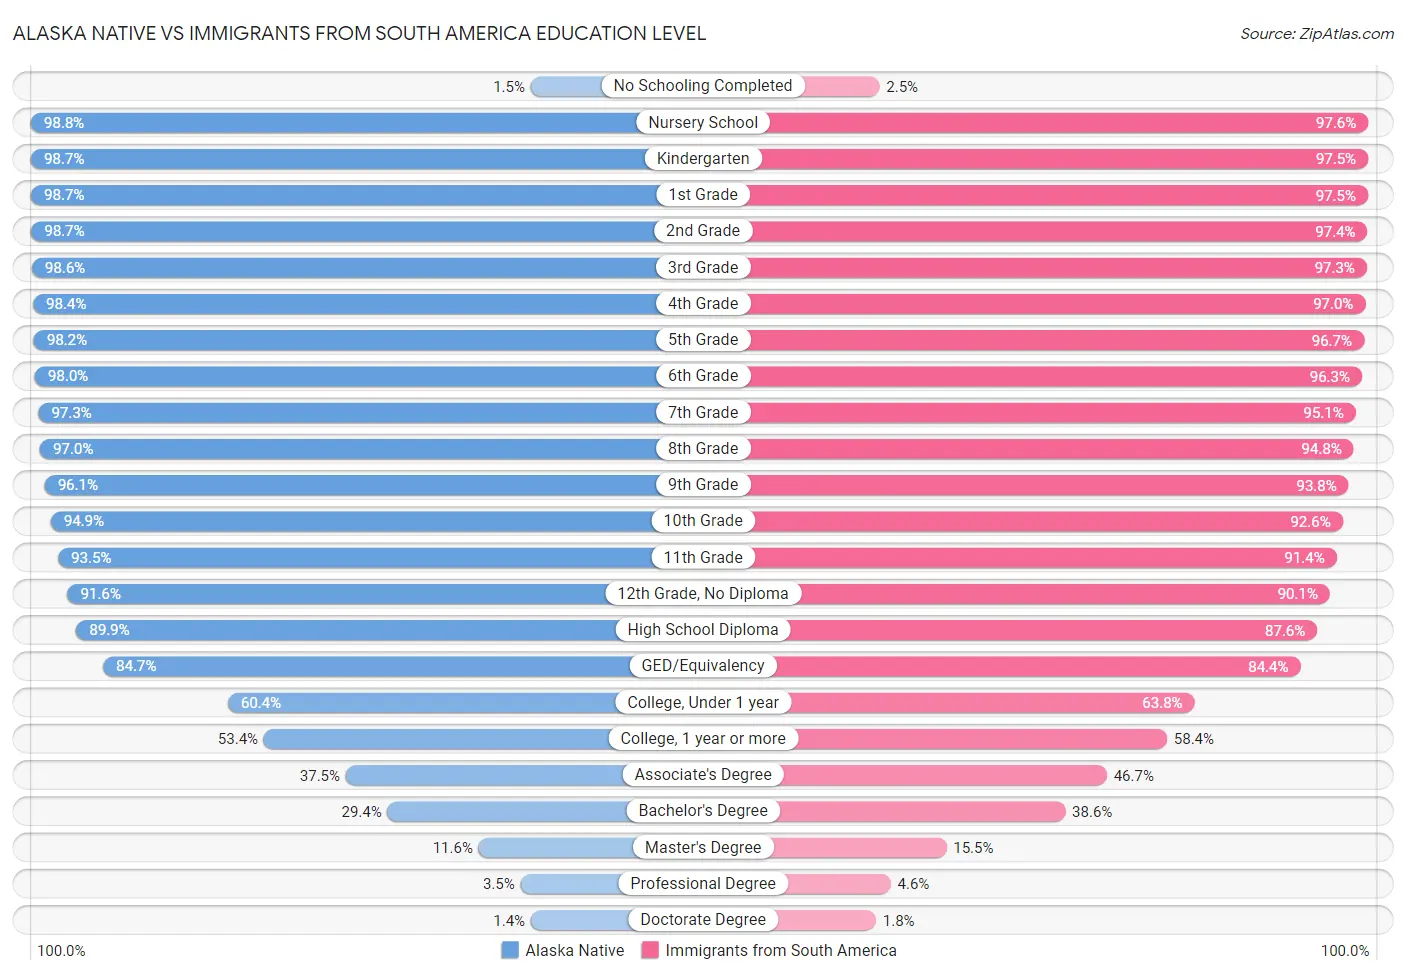 Alaska Native vs Immigrants from South America Education Level